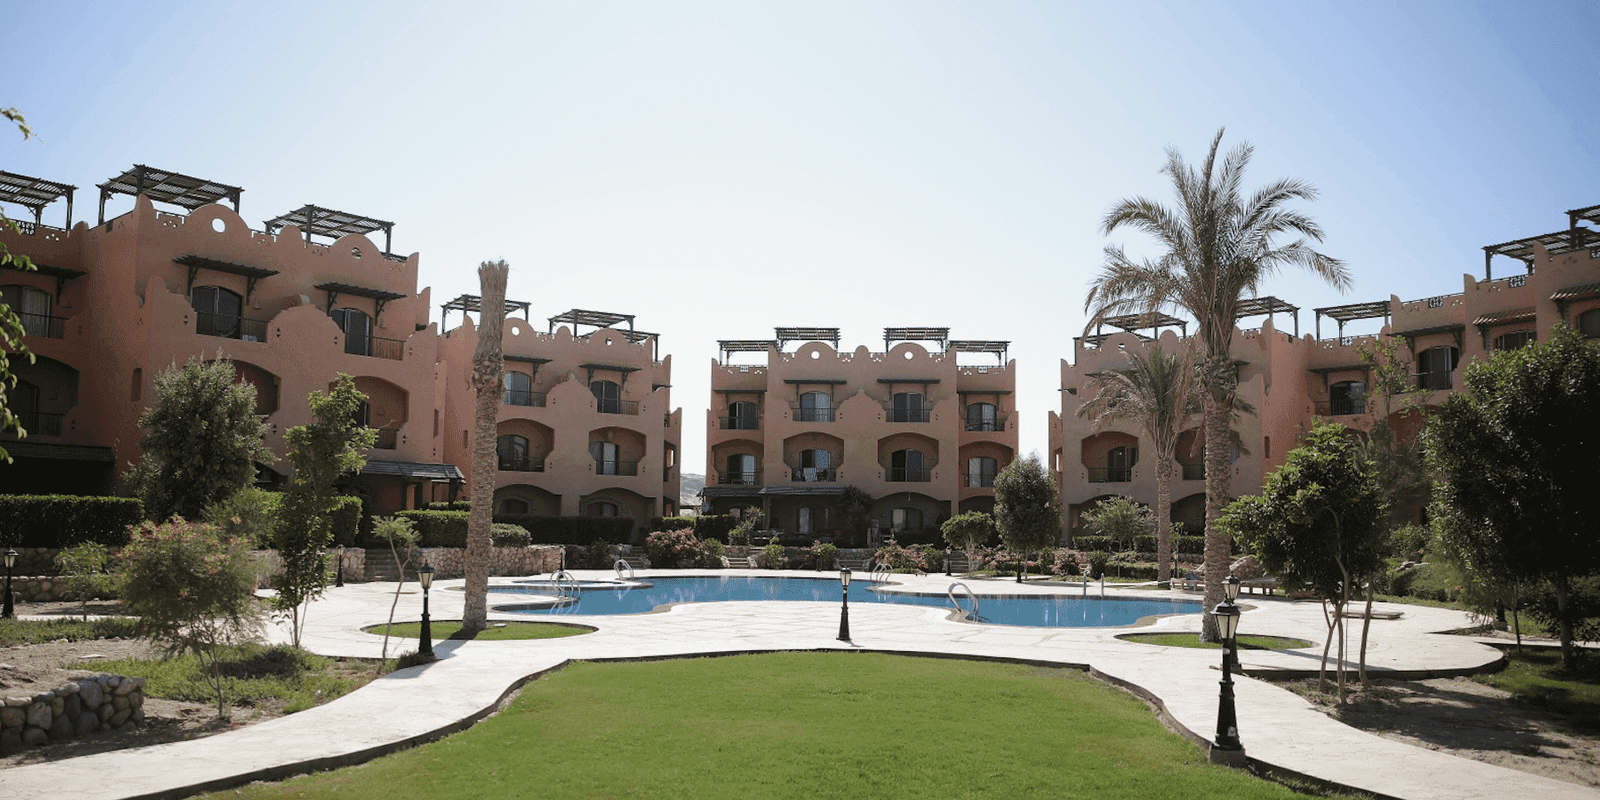 La Hacienda Ras Sudr by Bahrawi Investment Co. in Ras Sedr, South Sainai - Hero Image